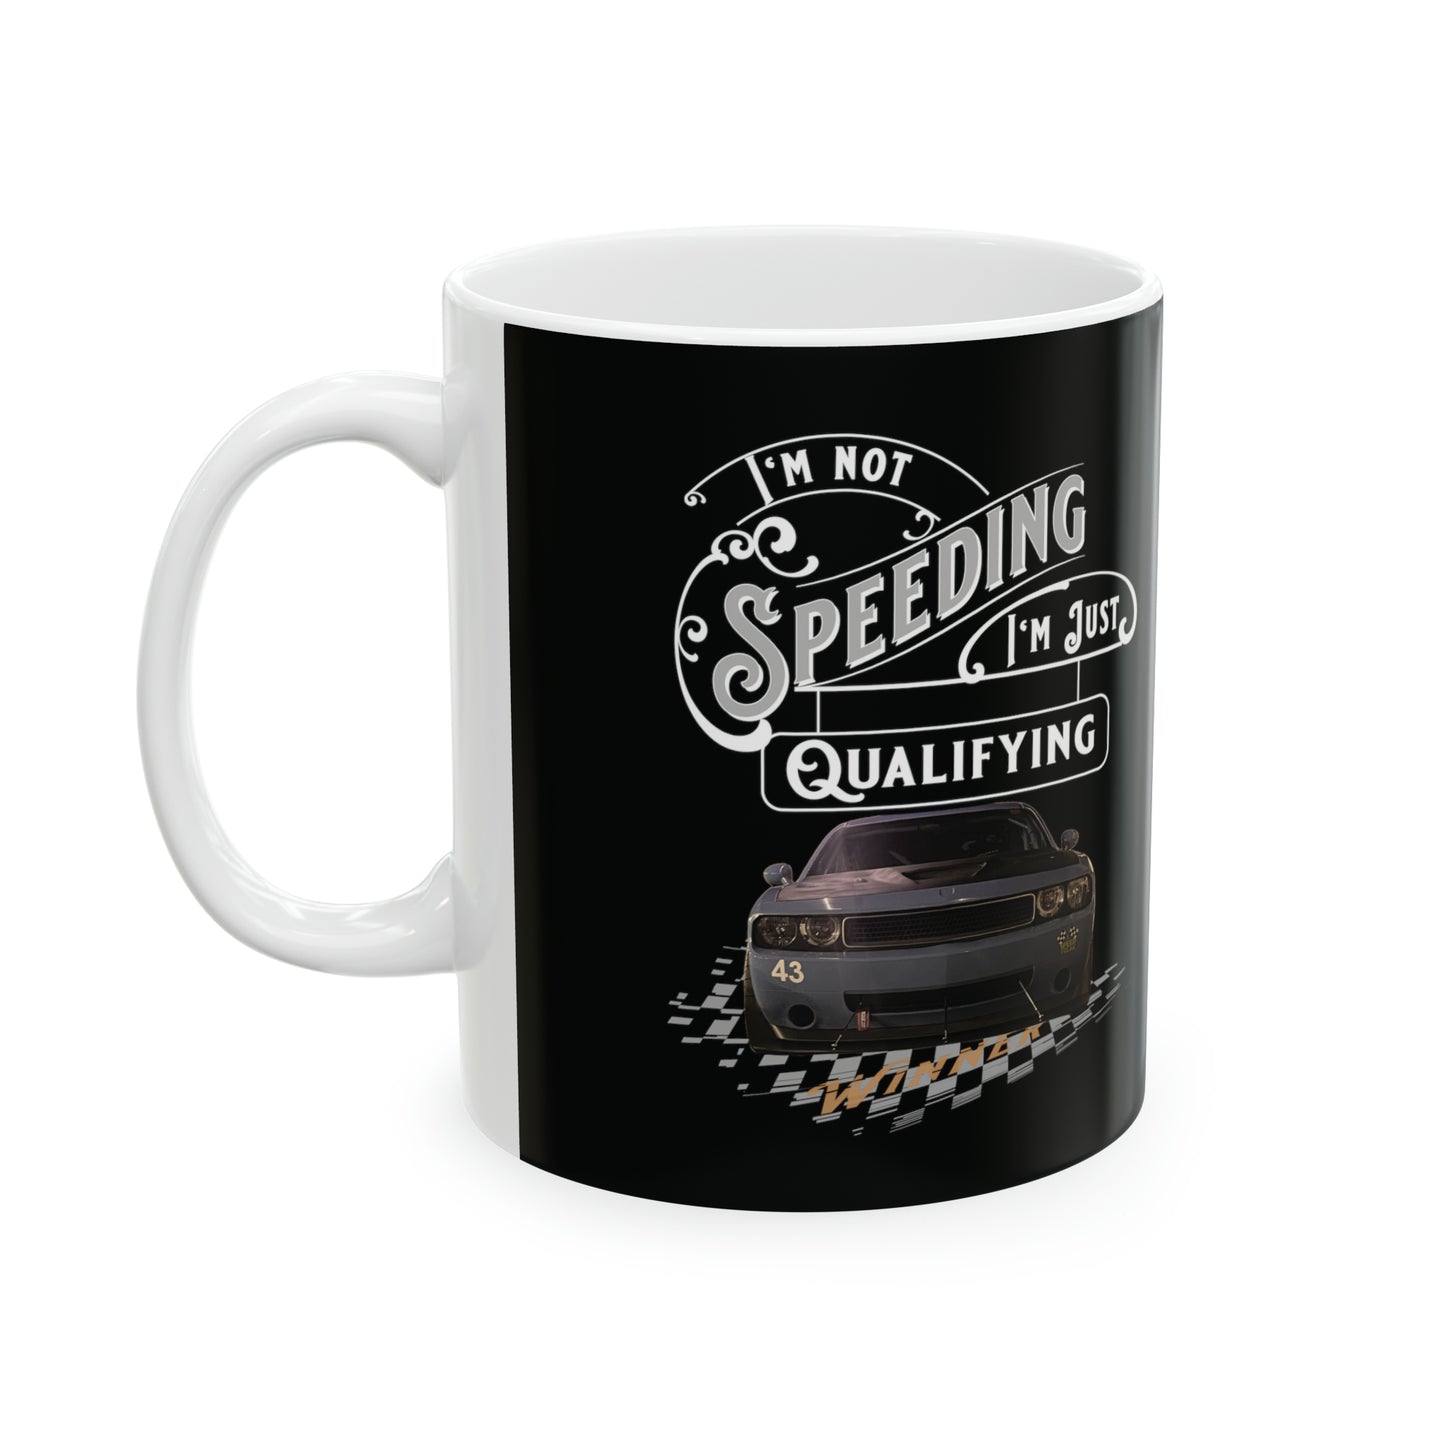 Ceramic Mug, 11oz - I'm not speeding I'm just qualifying